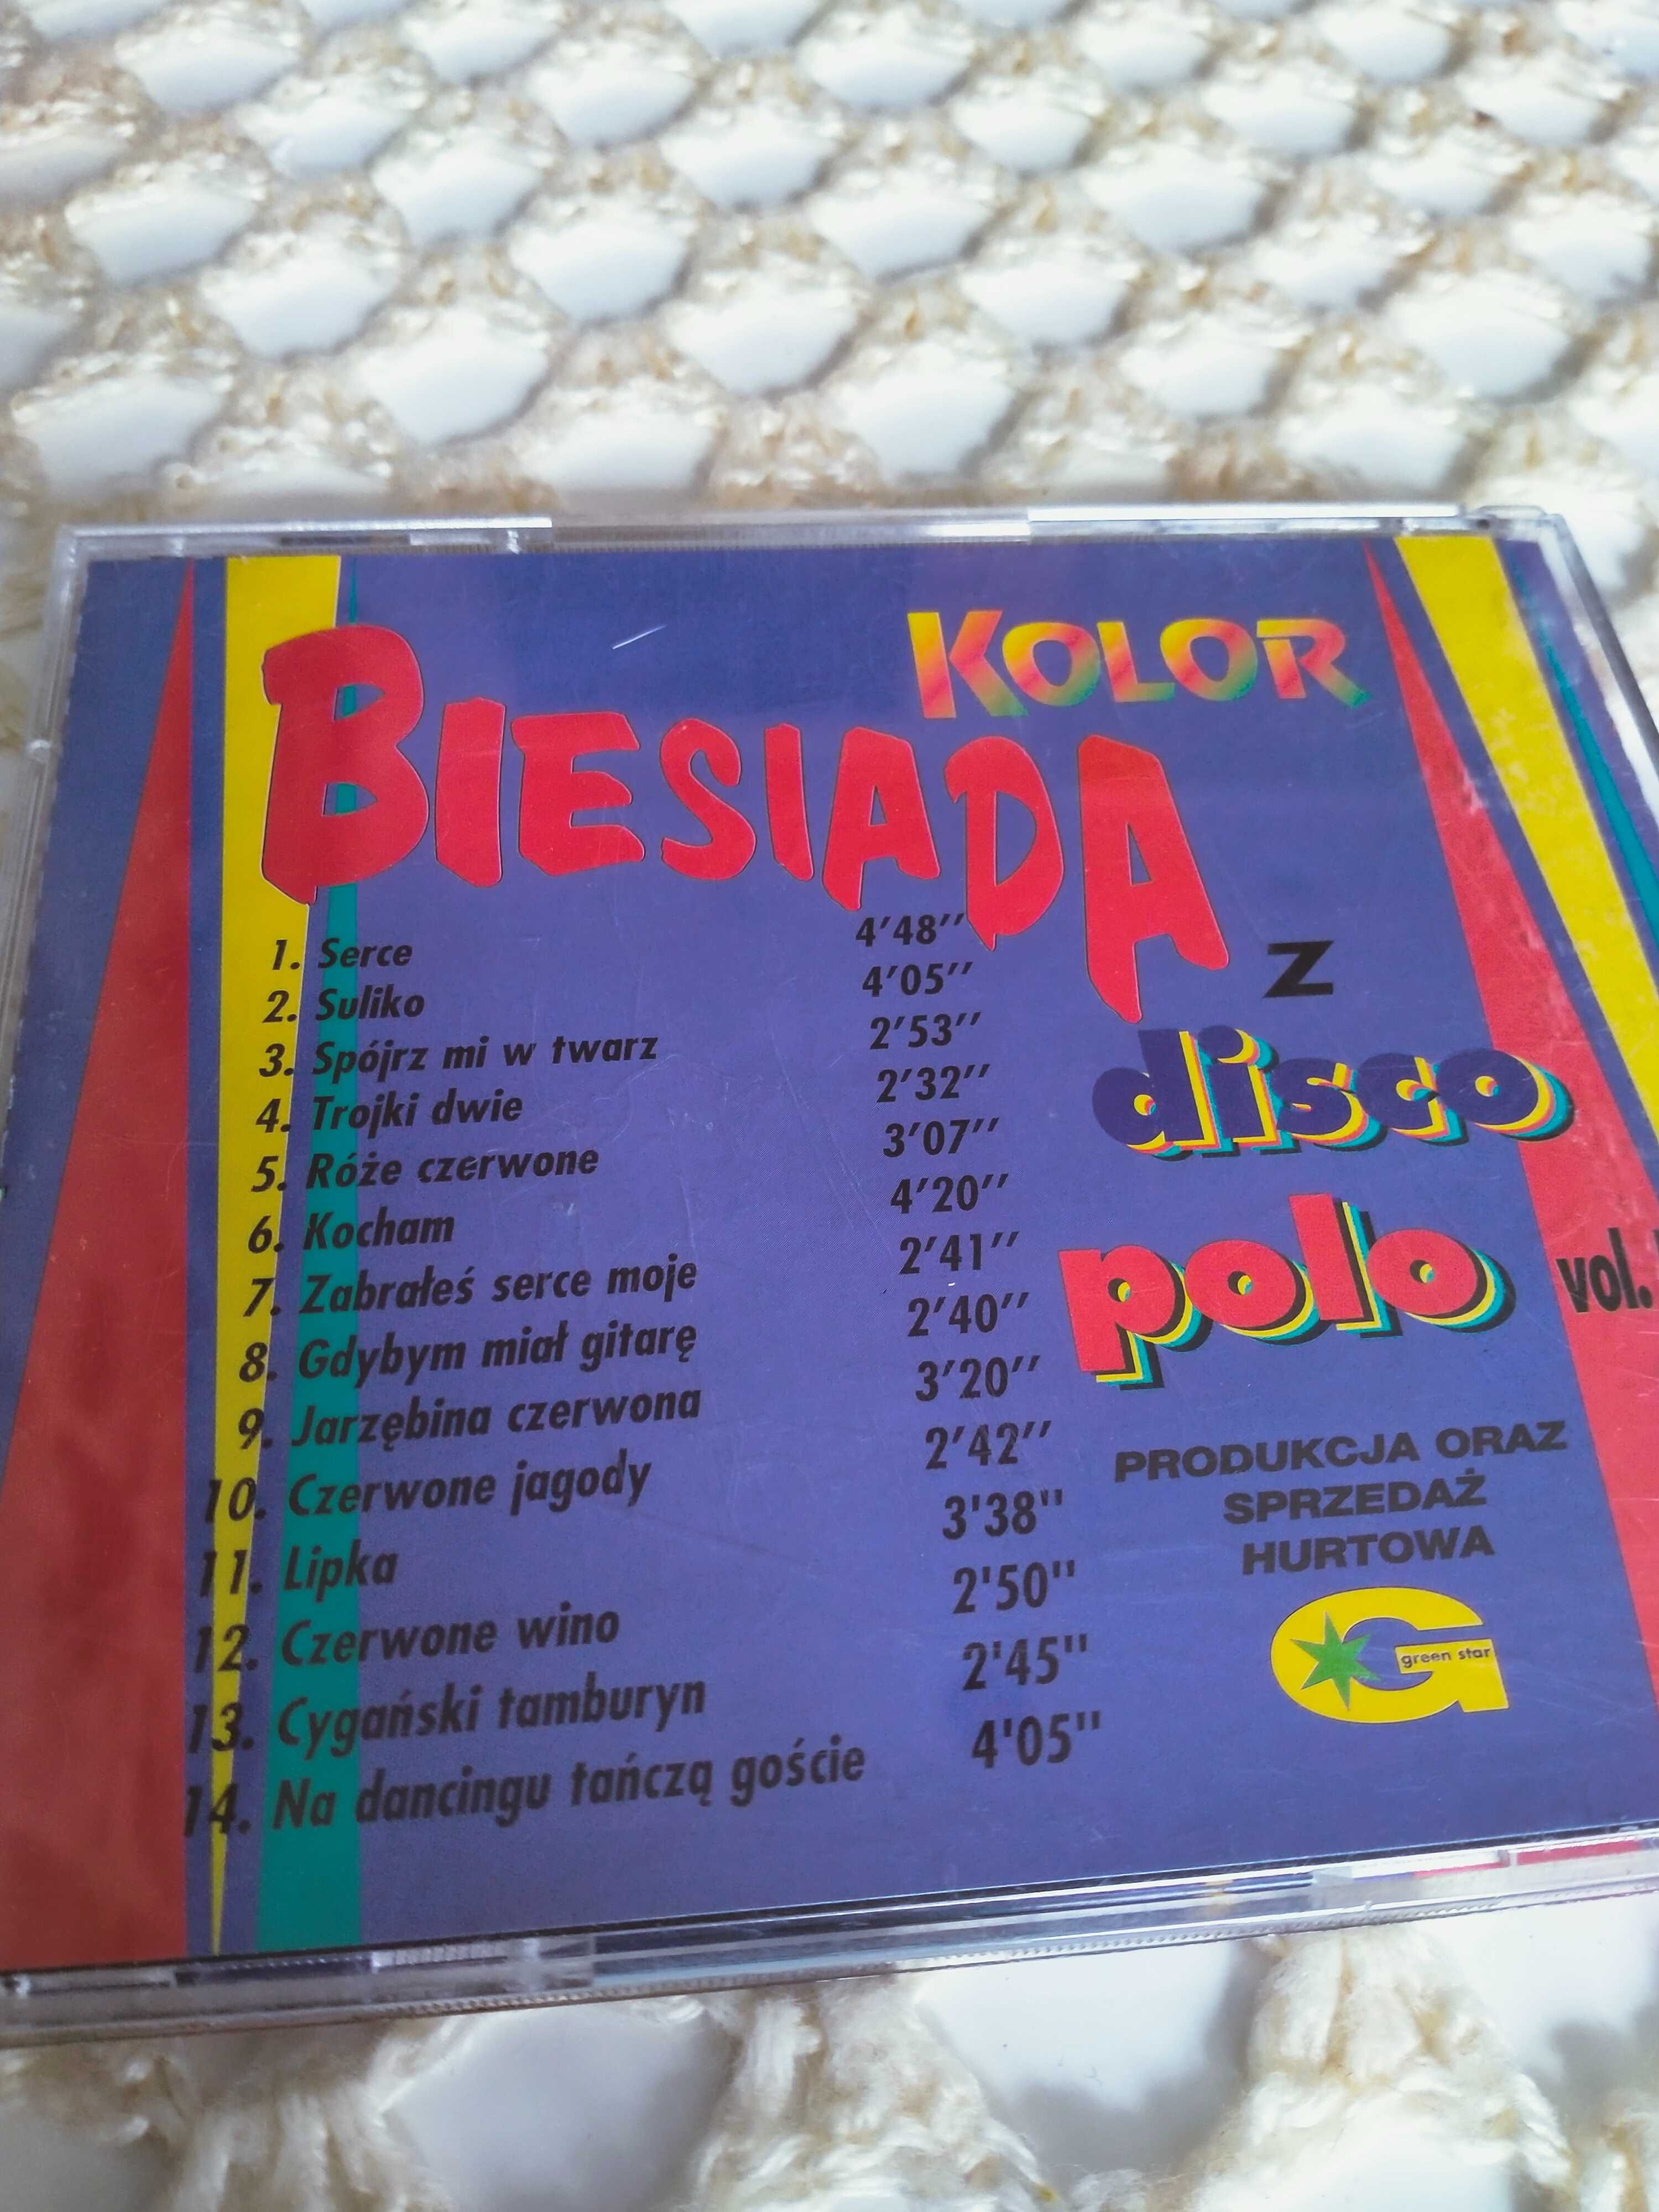 Kolor biesiada z disco polo CD